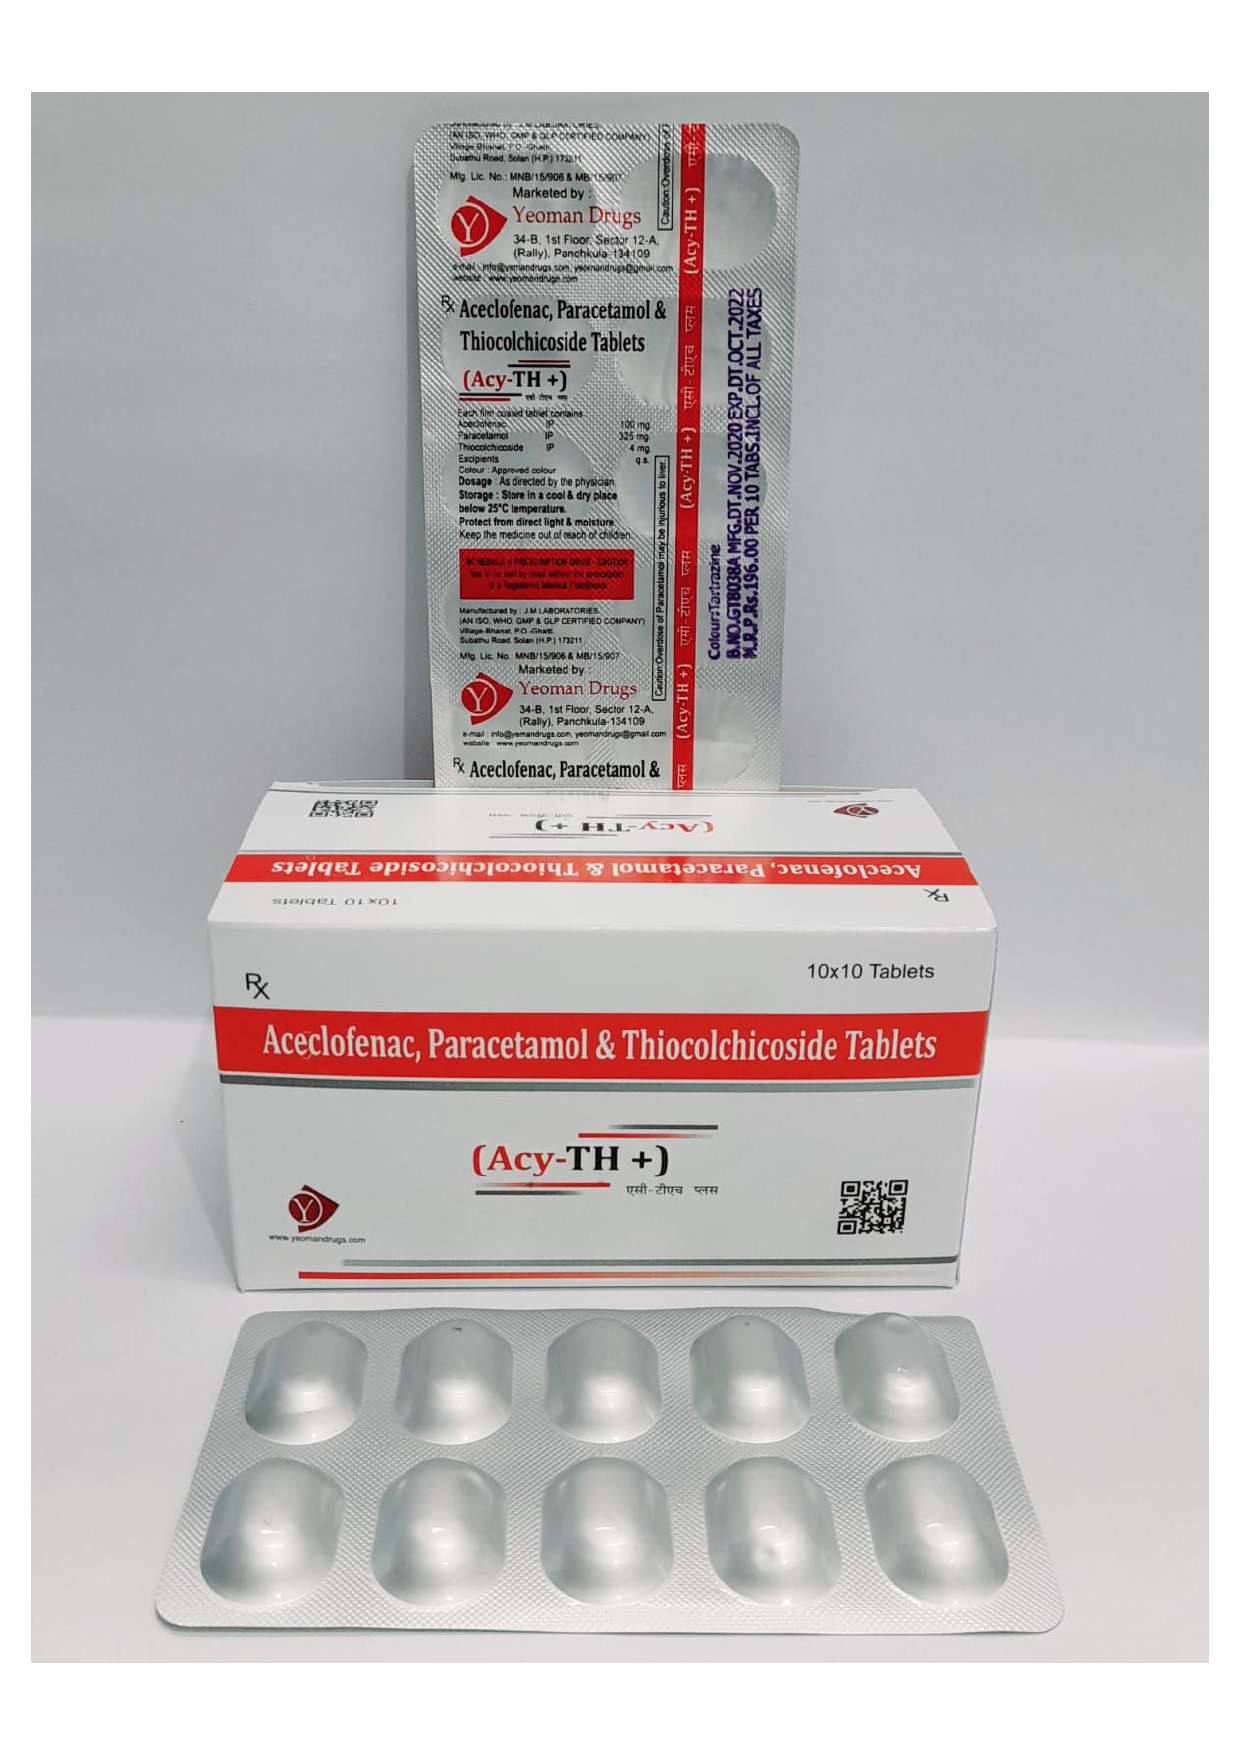 aceclofenac 100mg.+ paracetamol 325mg. + thiocolchicoside 4mg.